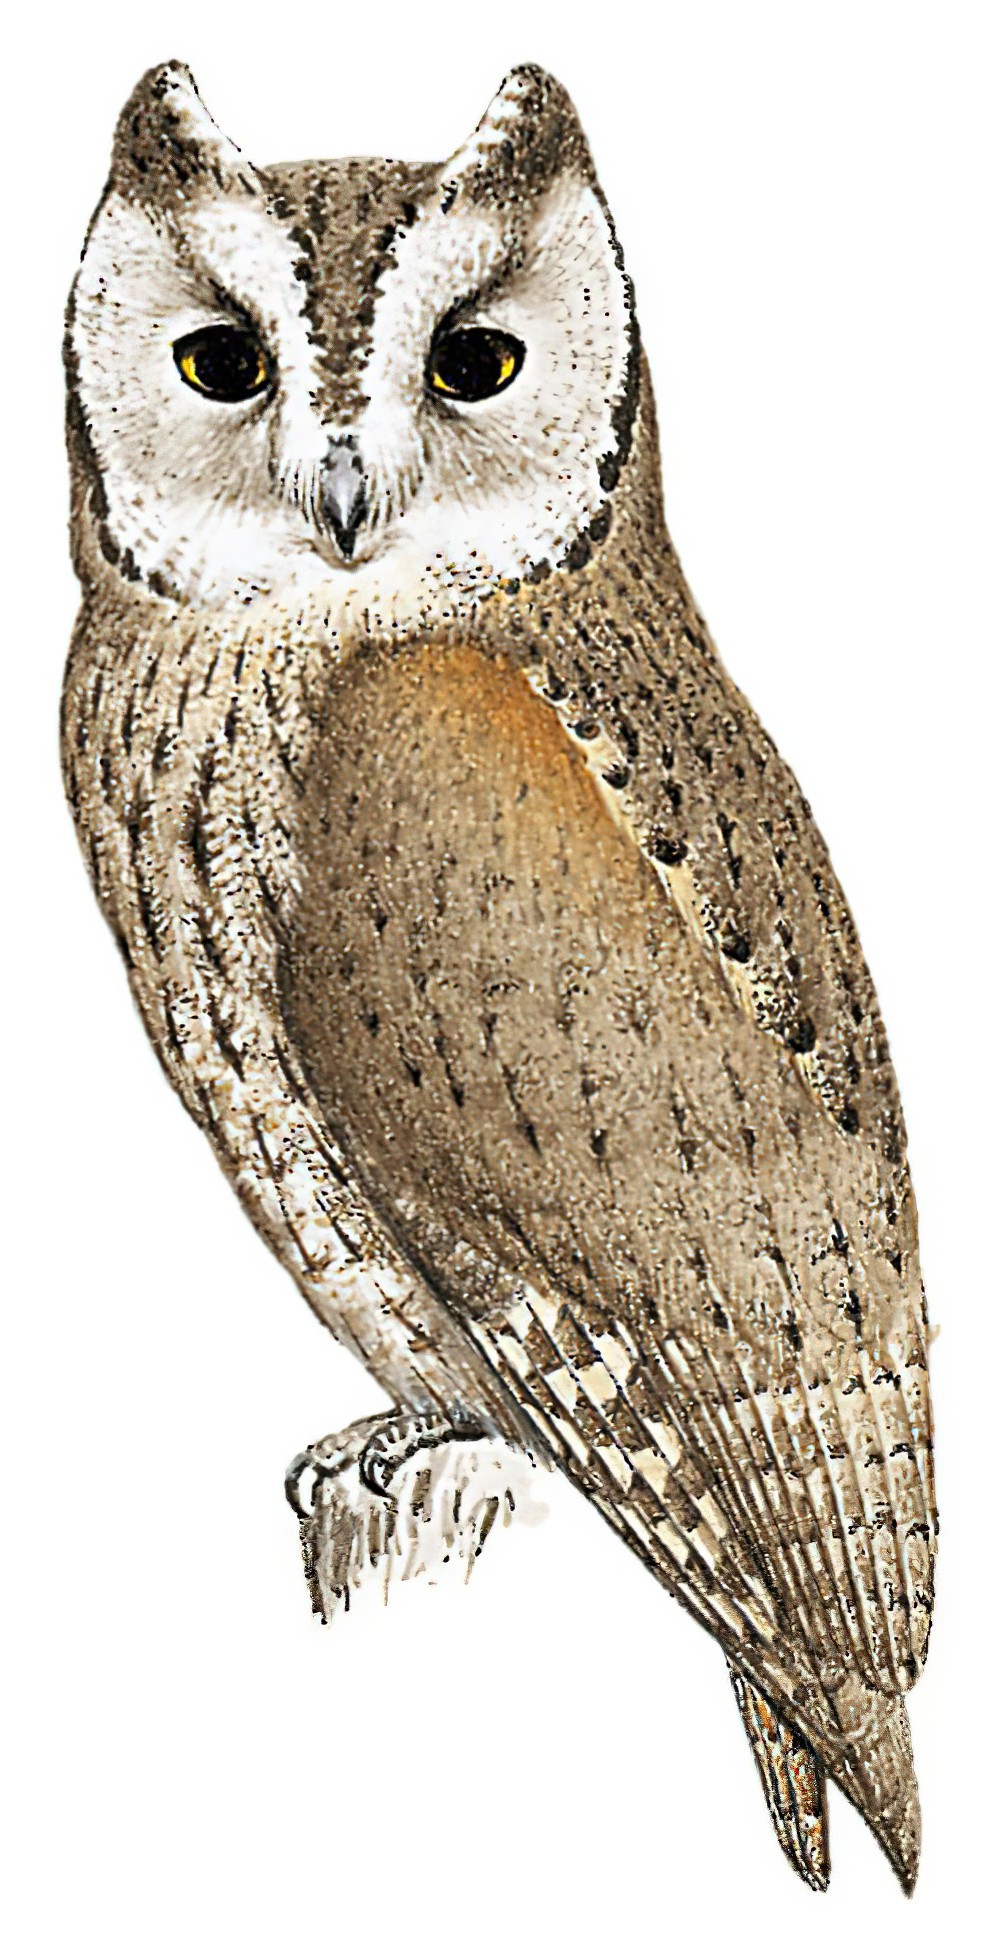 Arabian Scops-Owl / Otus pamelae